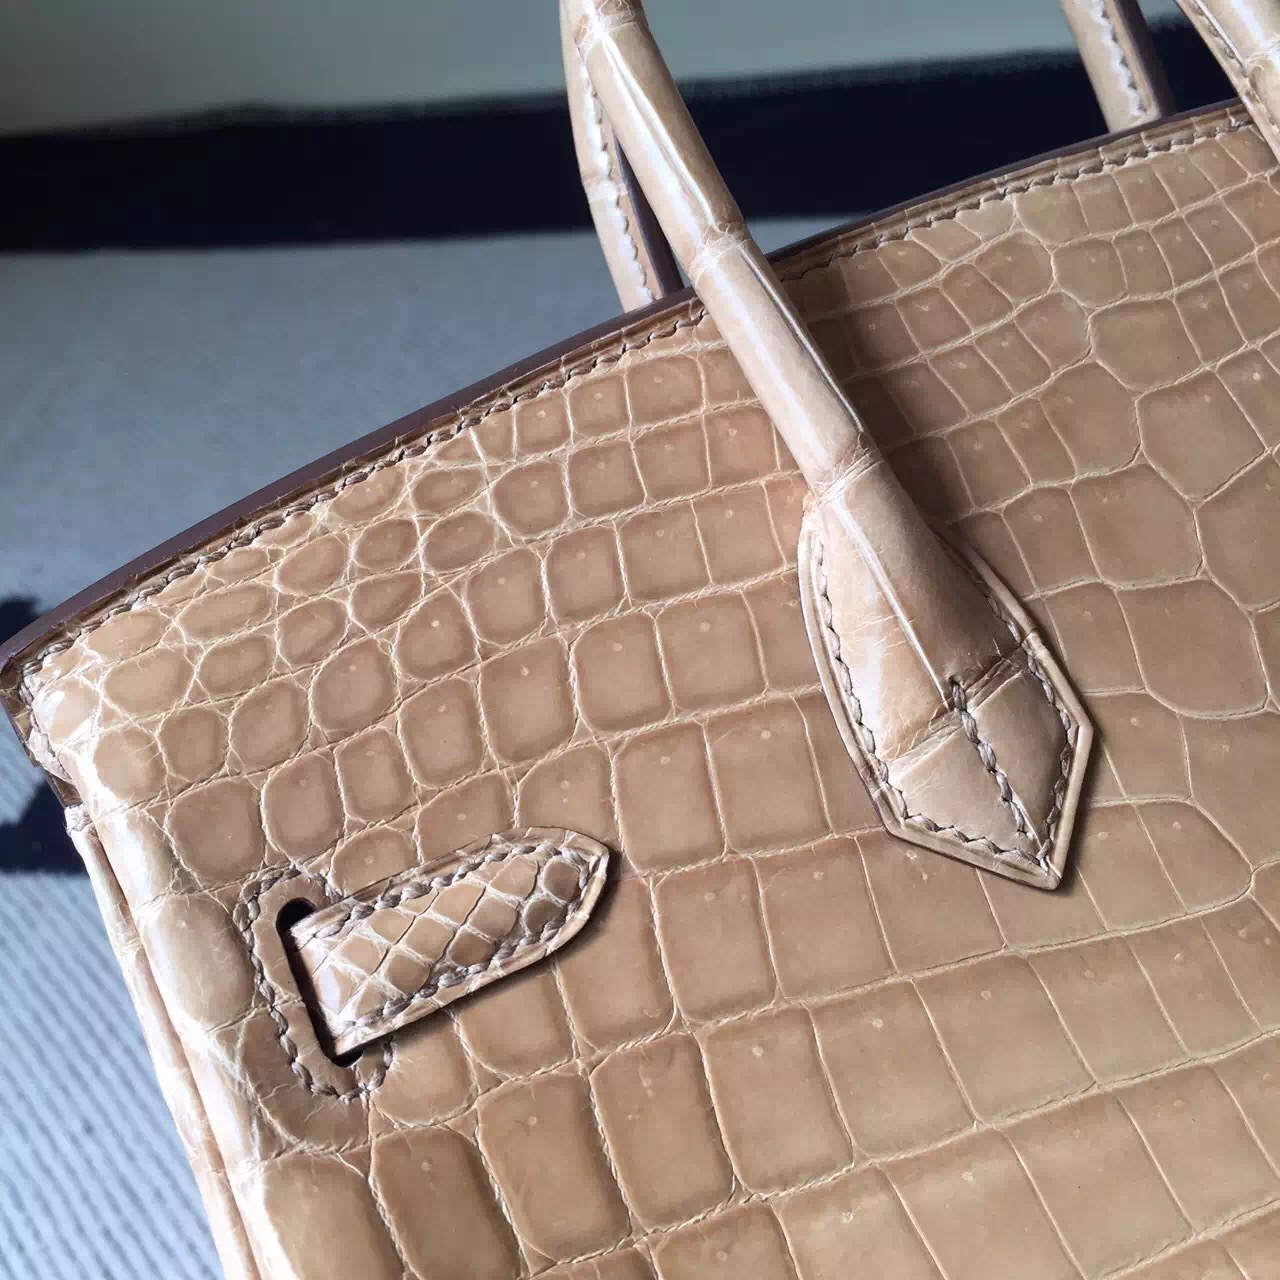 New Arrival Hermes Apricot Crocodile Shiny Leather Birkin Bag 25cm